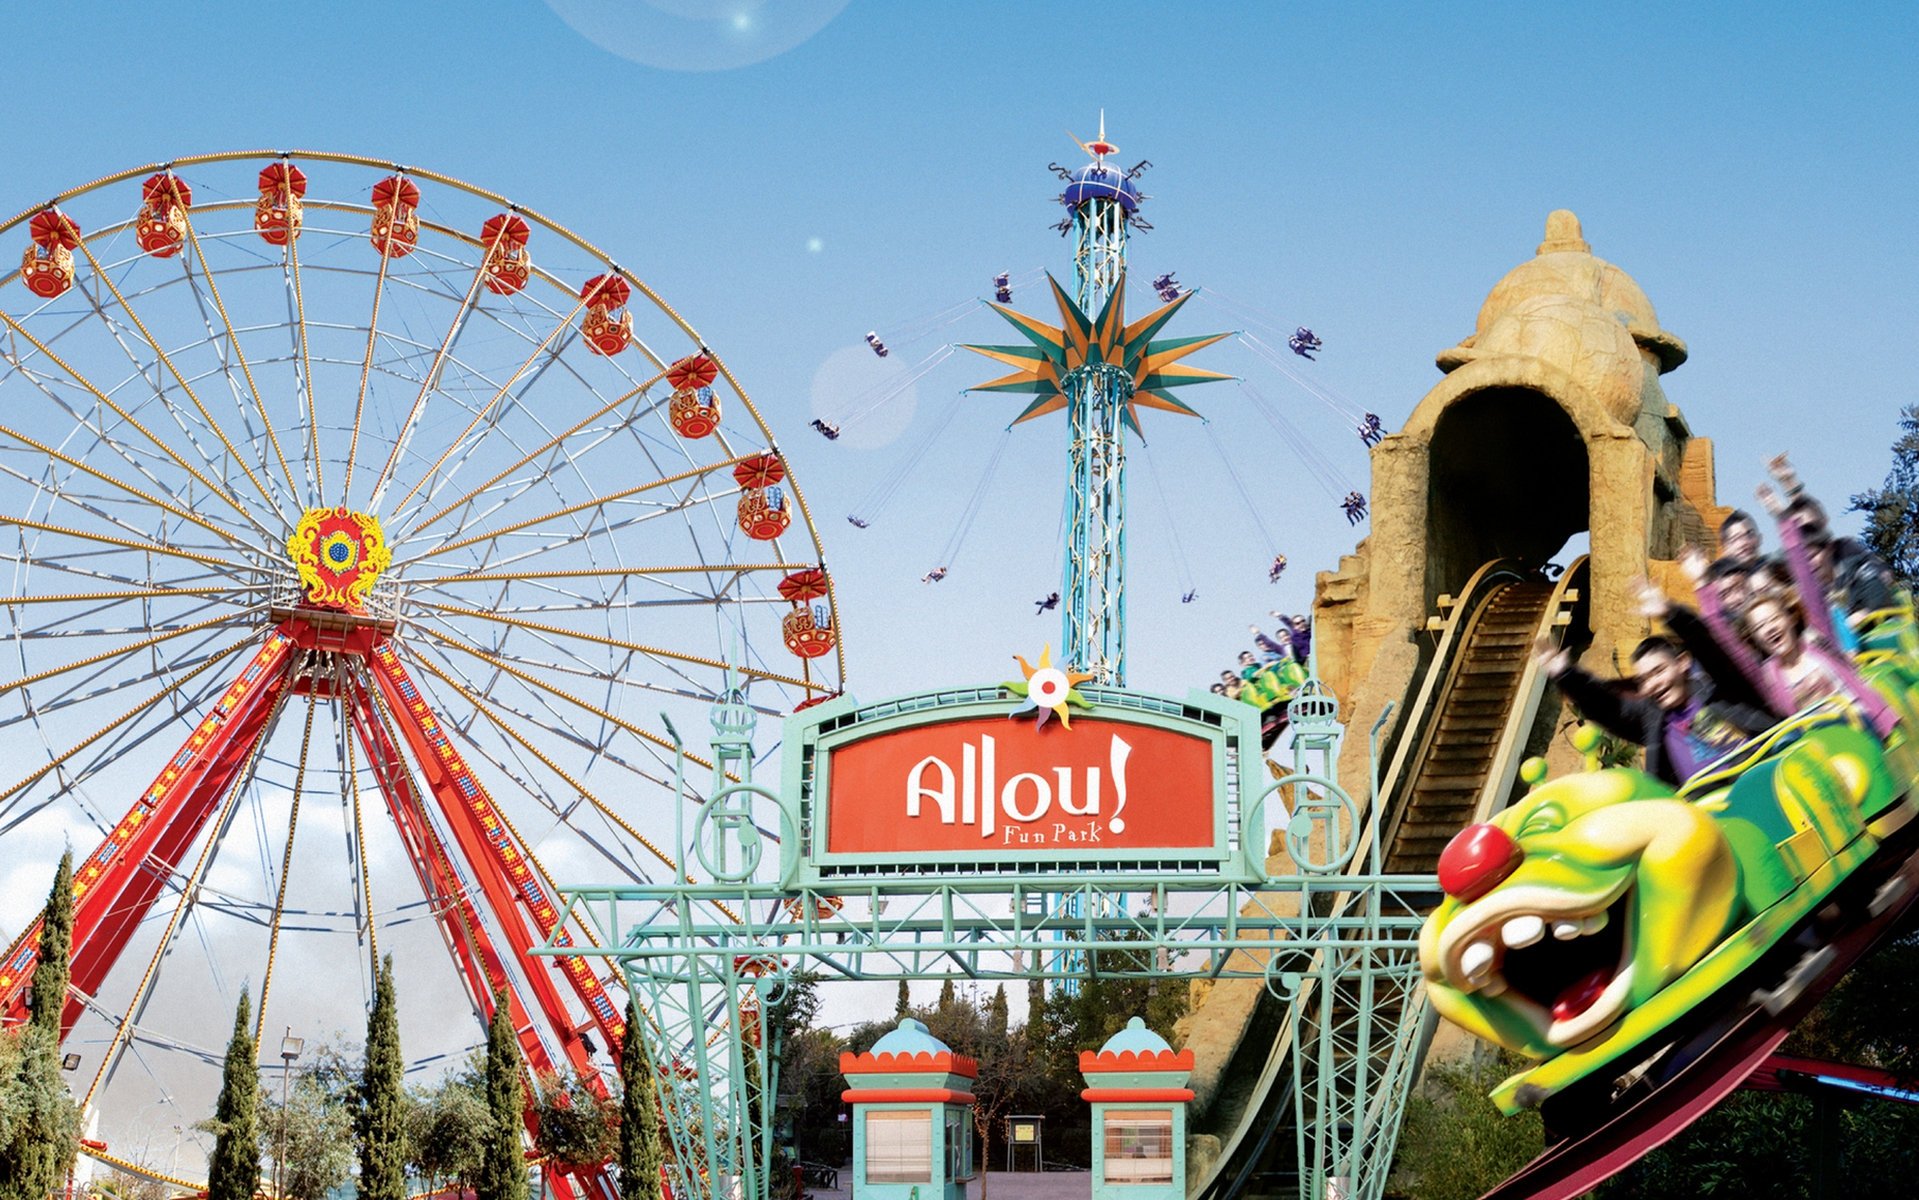 For non-stop games, visit the theme parks Allou! Fun Park 